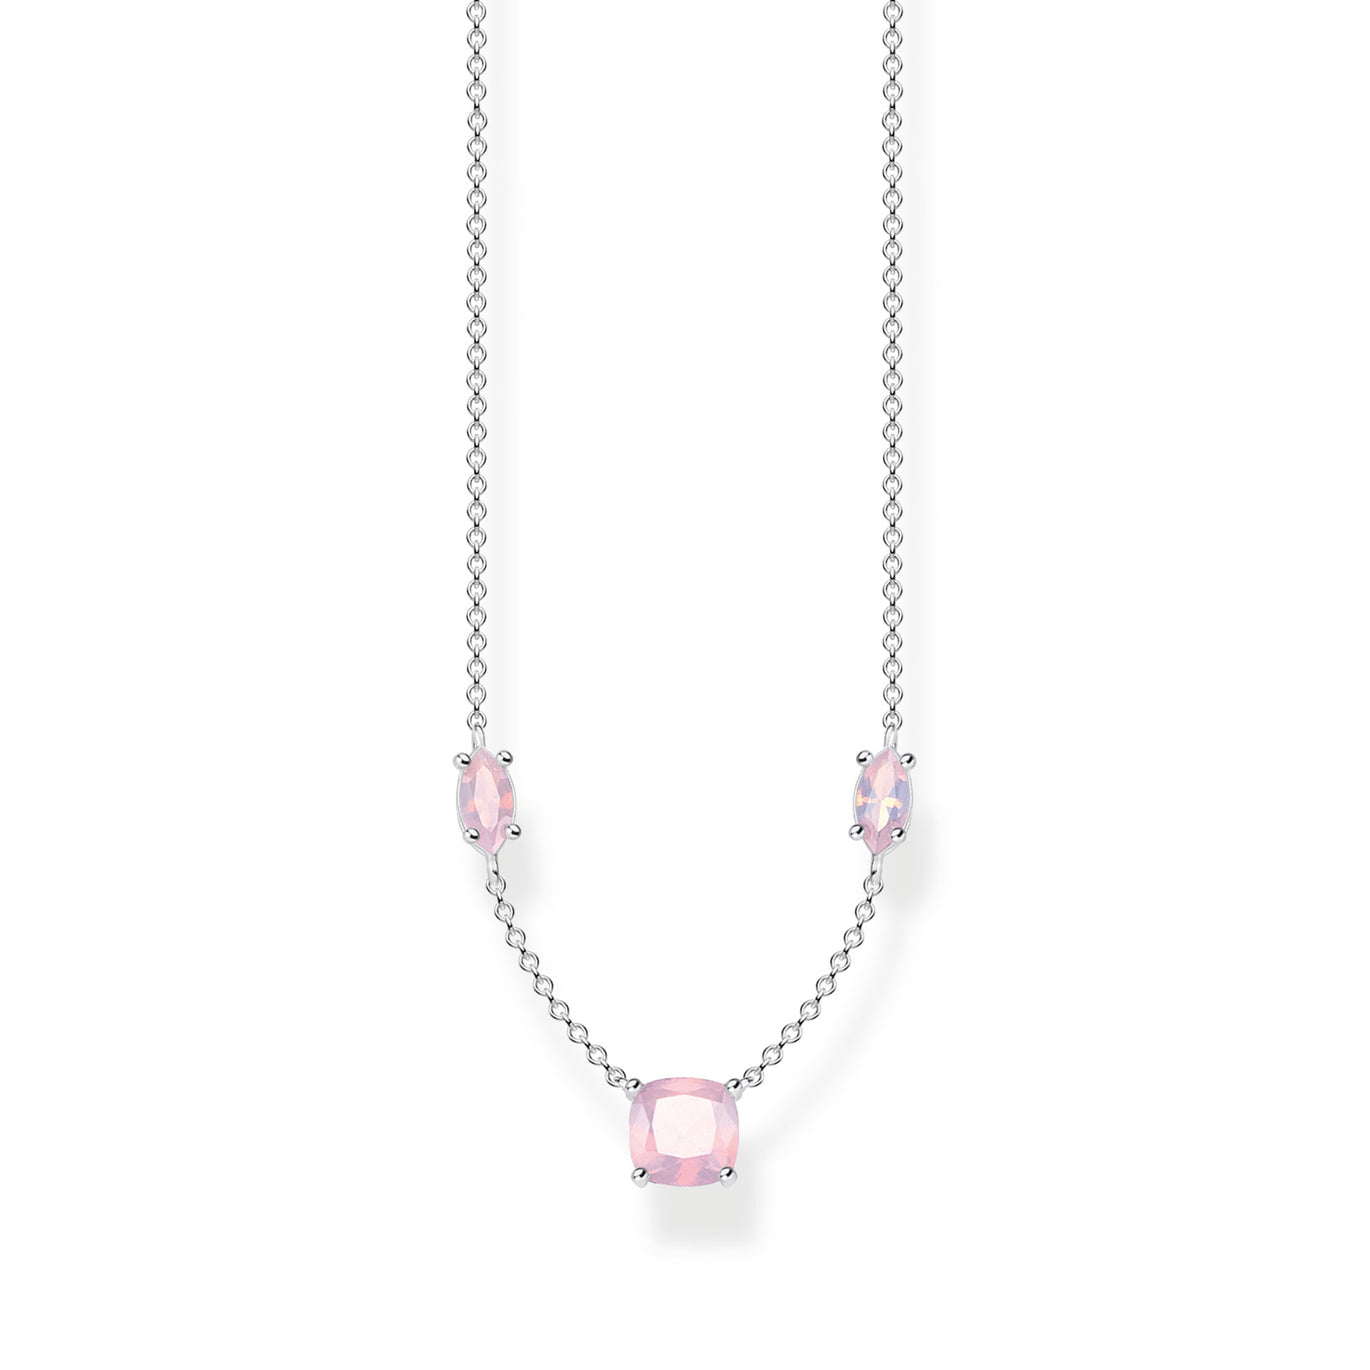 Thomas Sabo Pink Opal Necklace